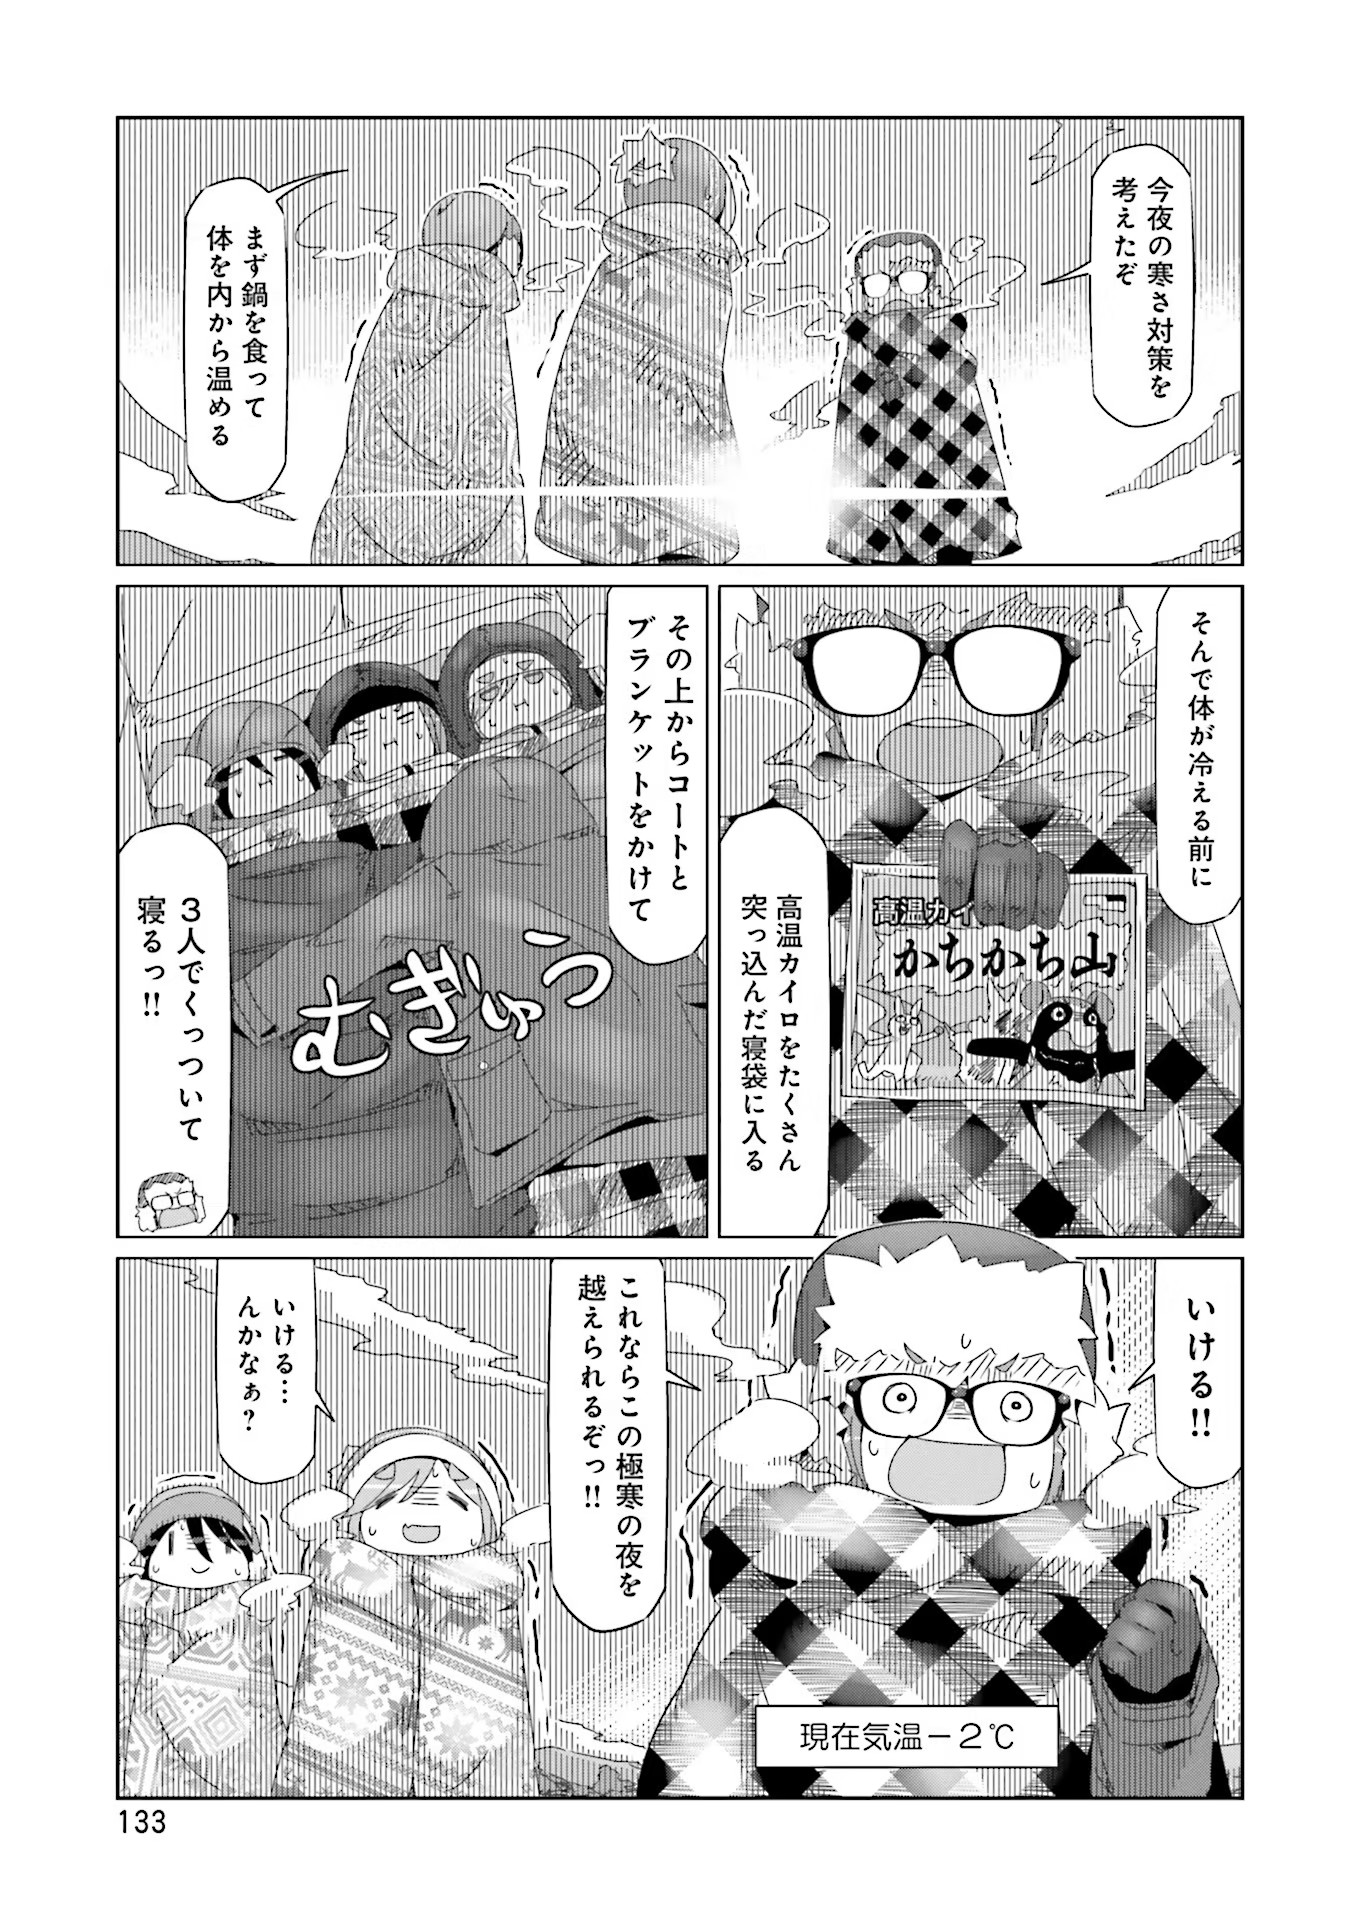 Yuru Camp - Chapter 34 - Page 1